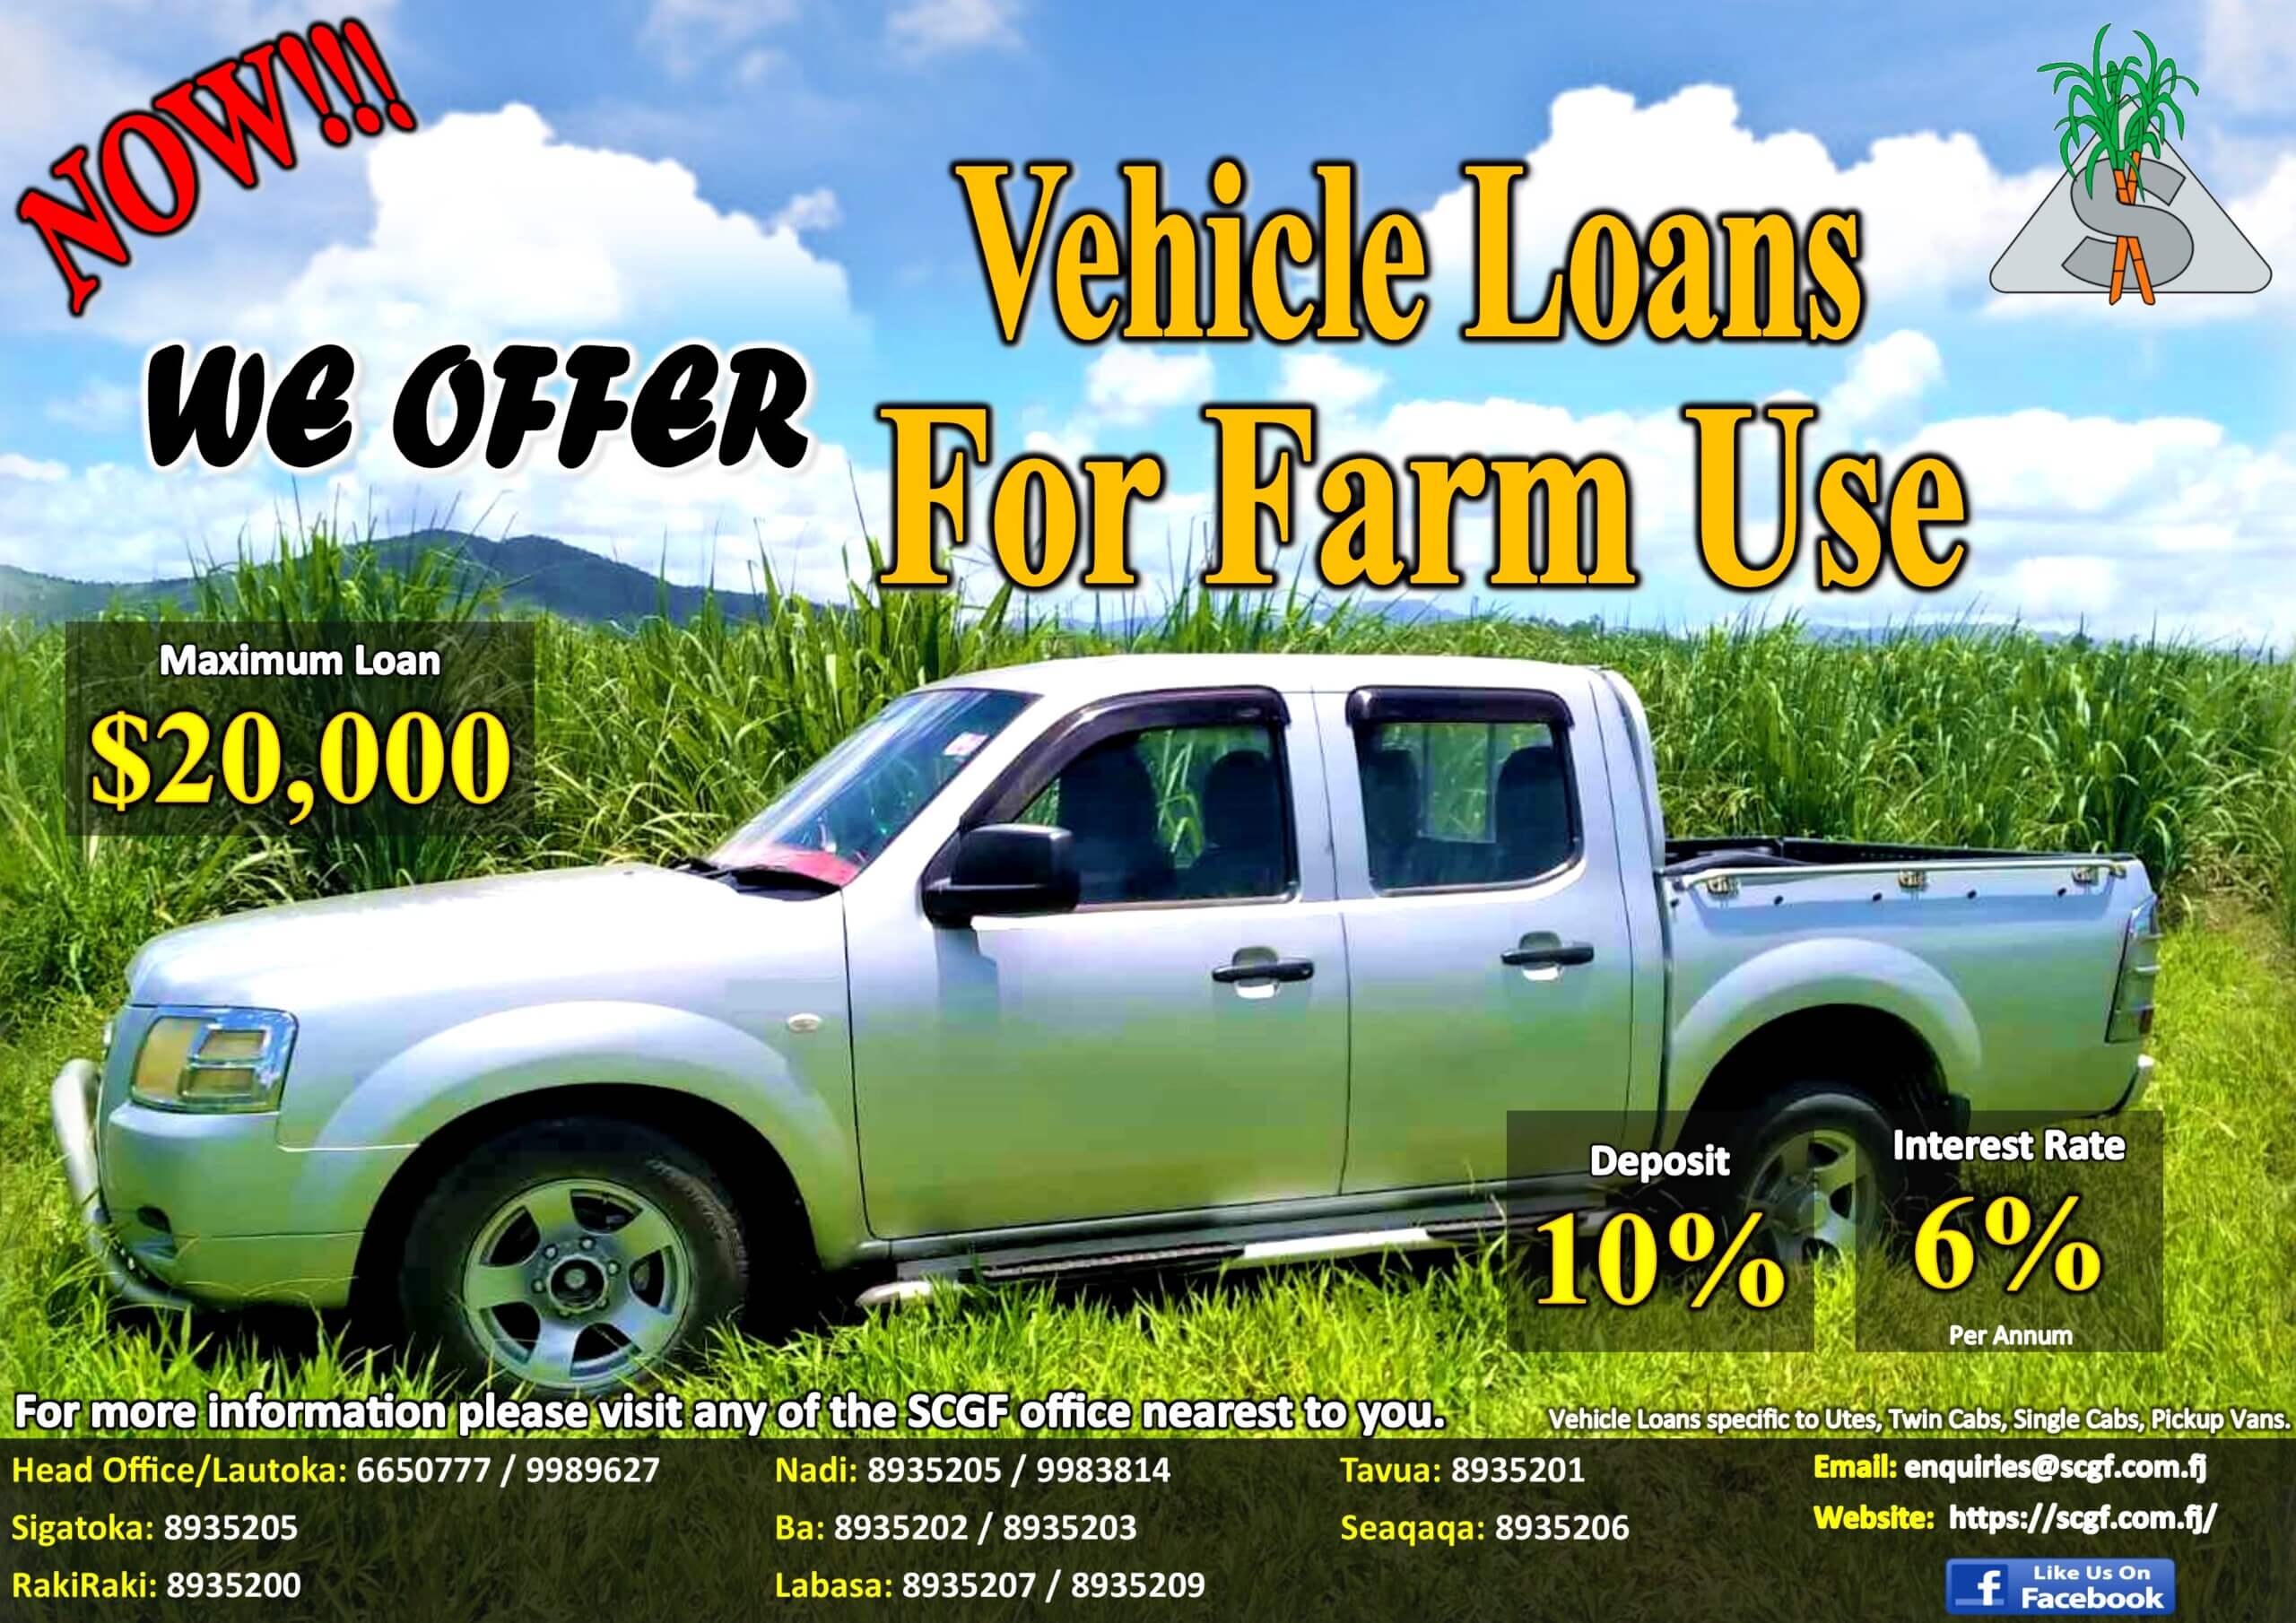 Vehicle Loans for Farm Use